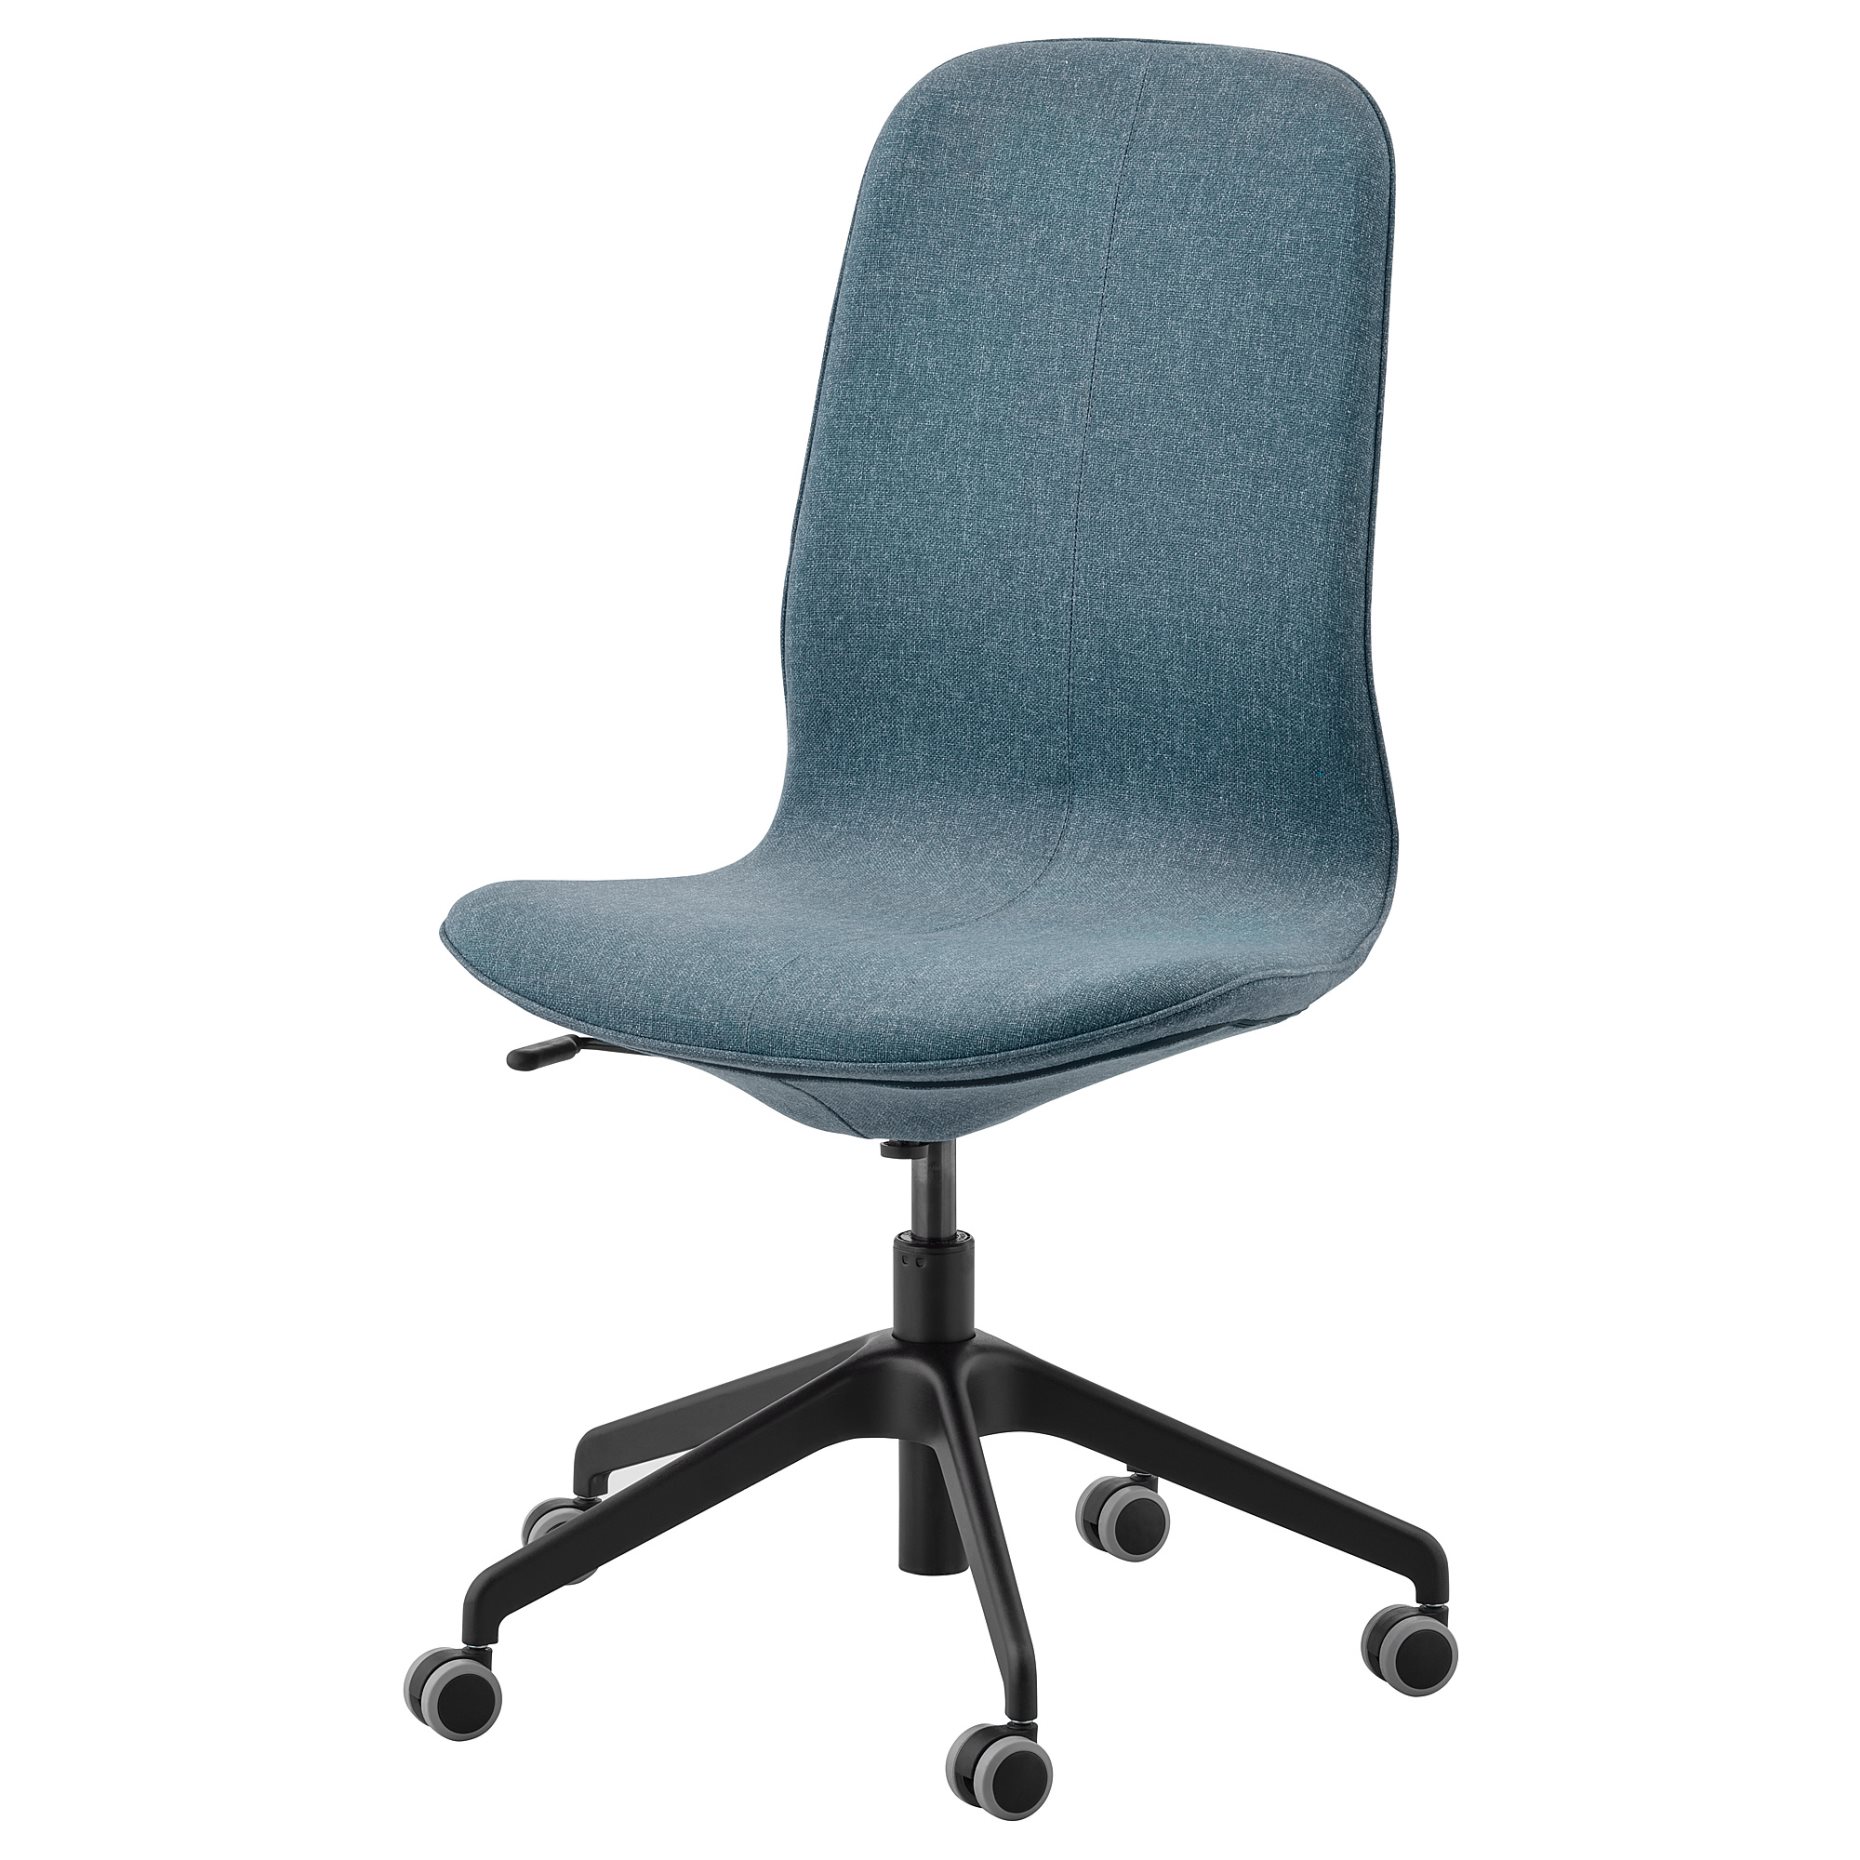 LÅNGFJÄLL, swivel chair, 891.776.65